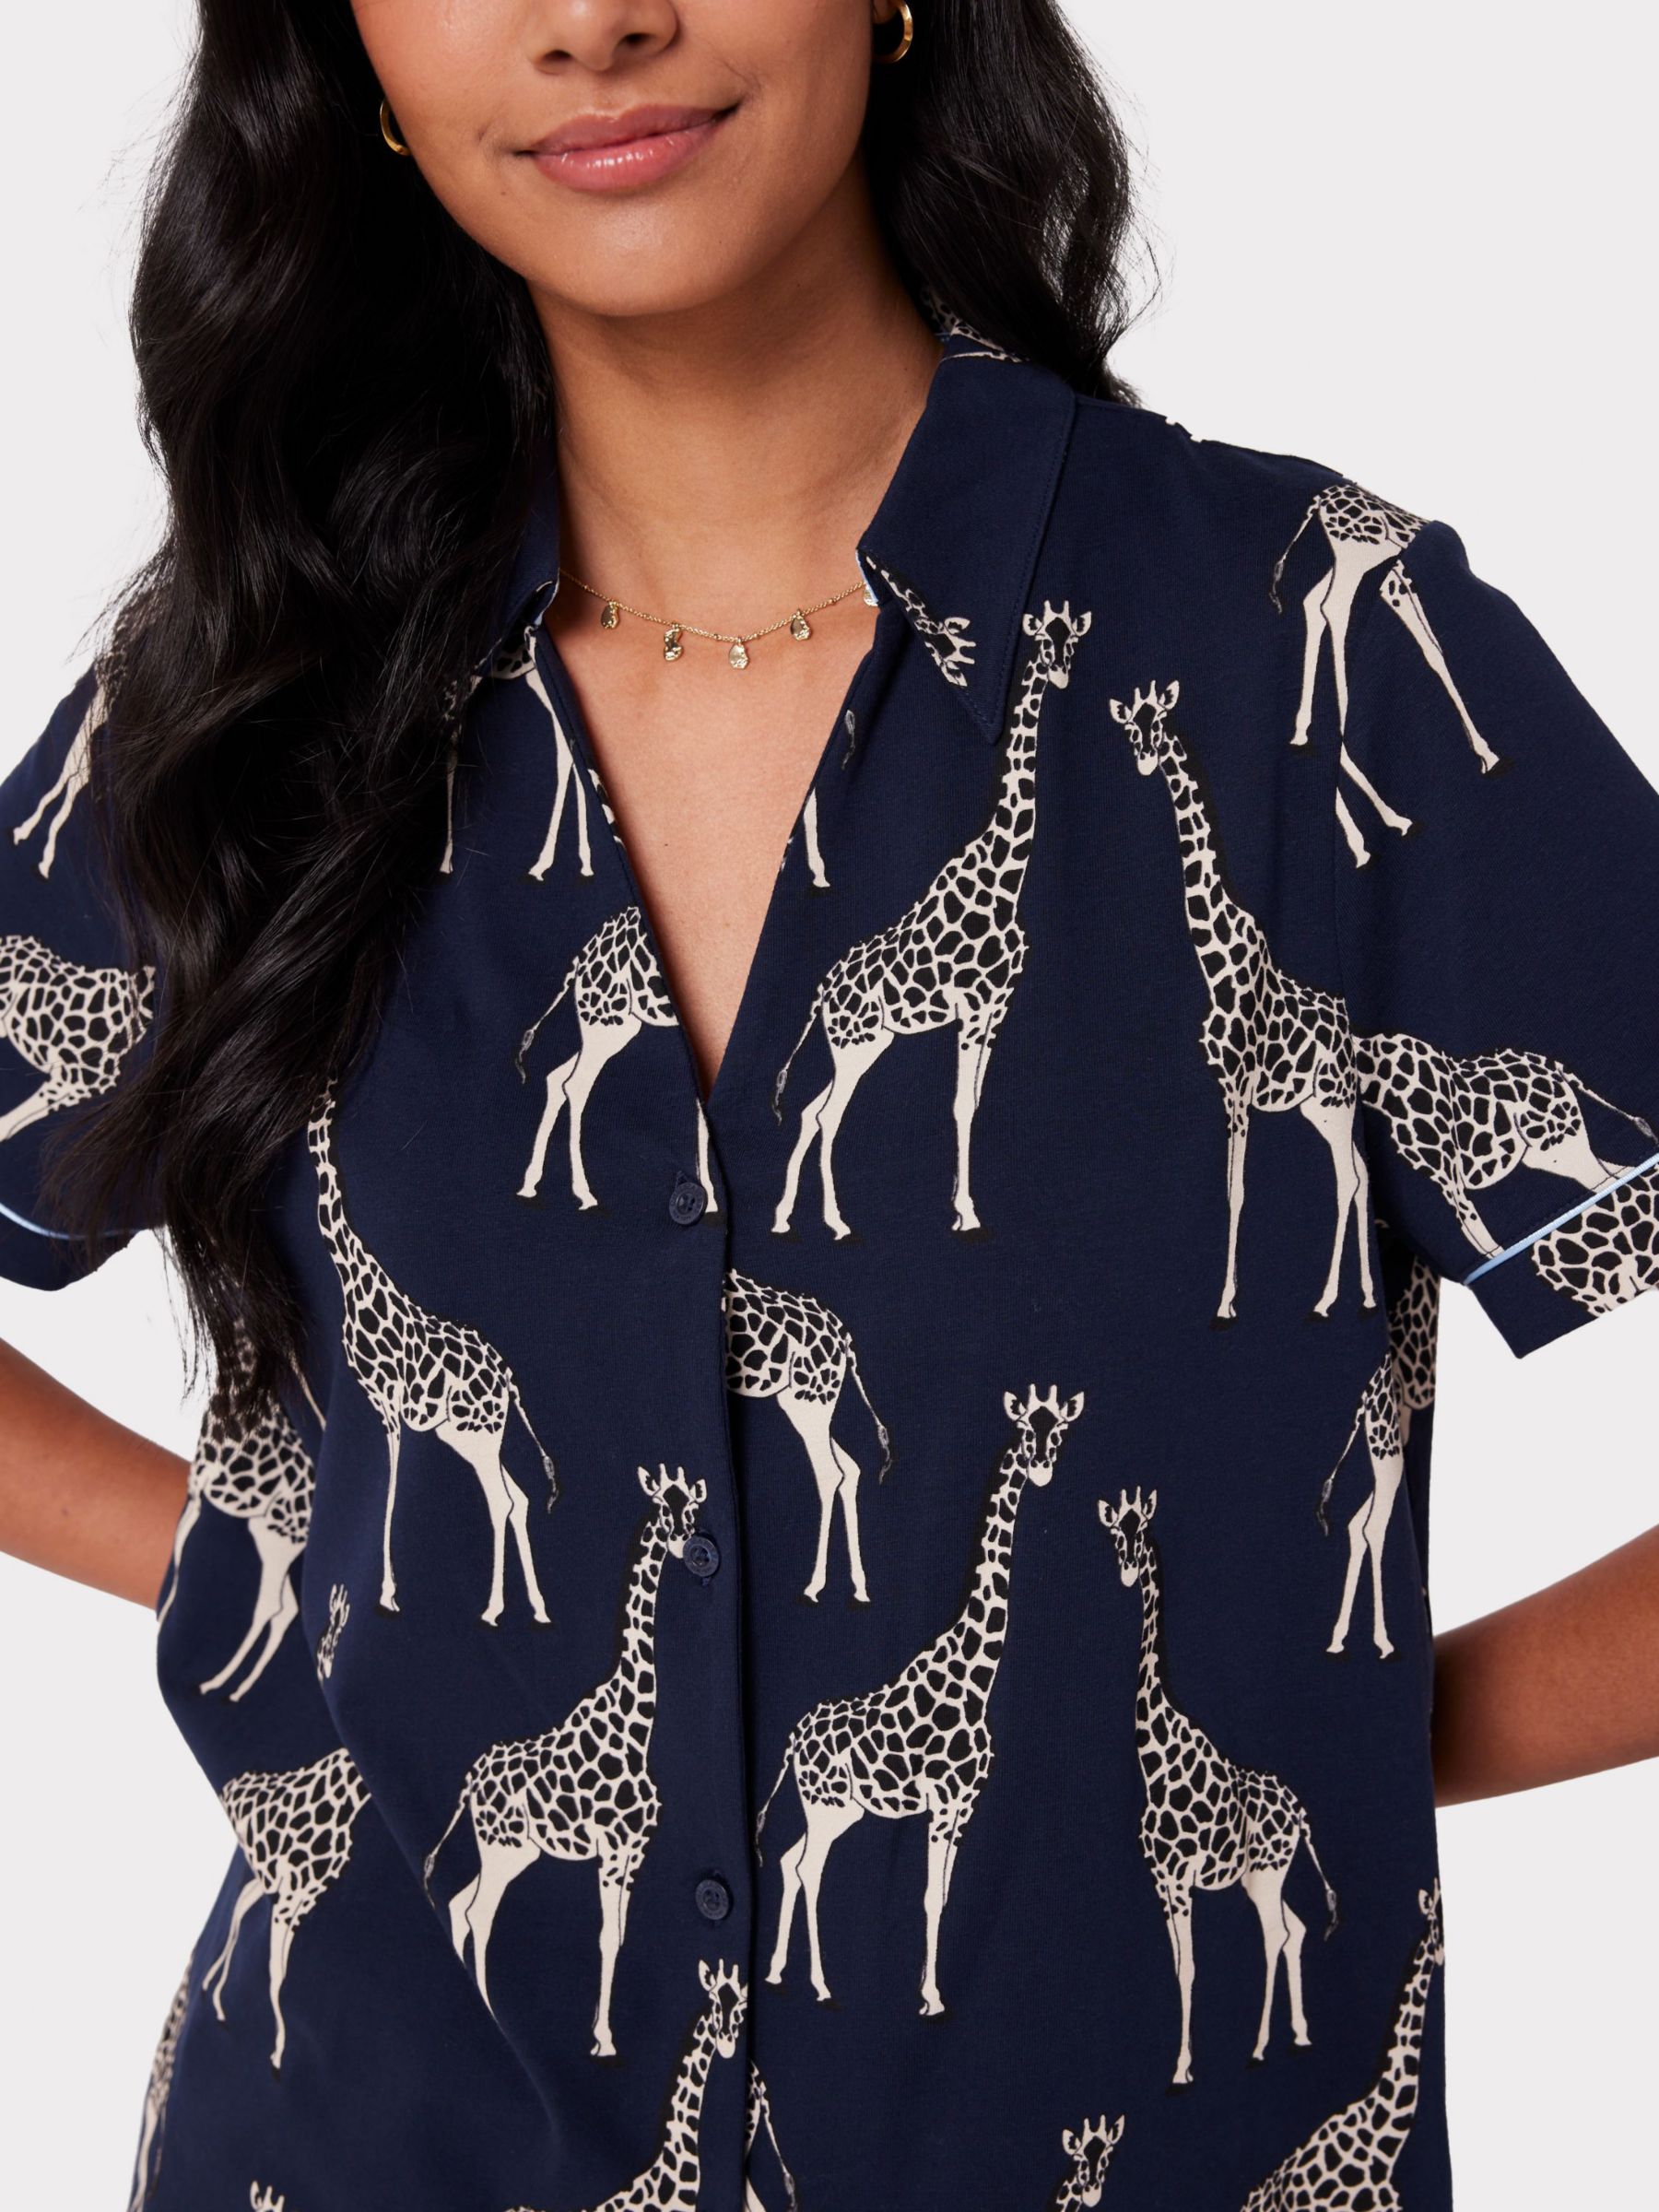 Buy Chelsea Peers Organic Cotton Blend Giraffe Print Shorts Pyjama Set, Navy Online at johnlewis.com